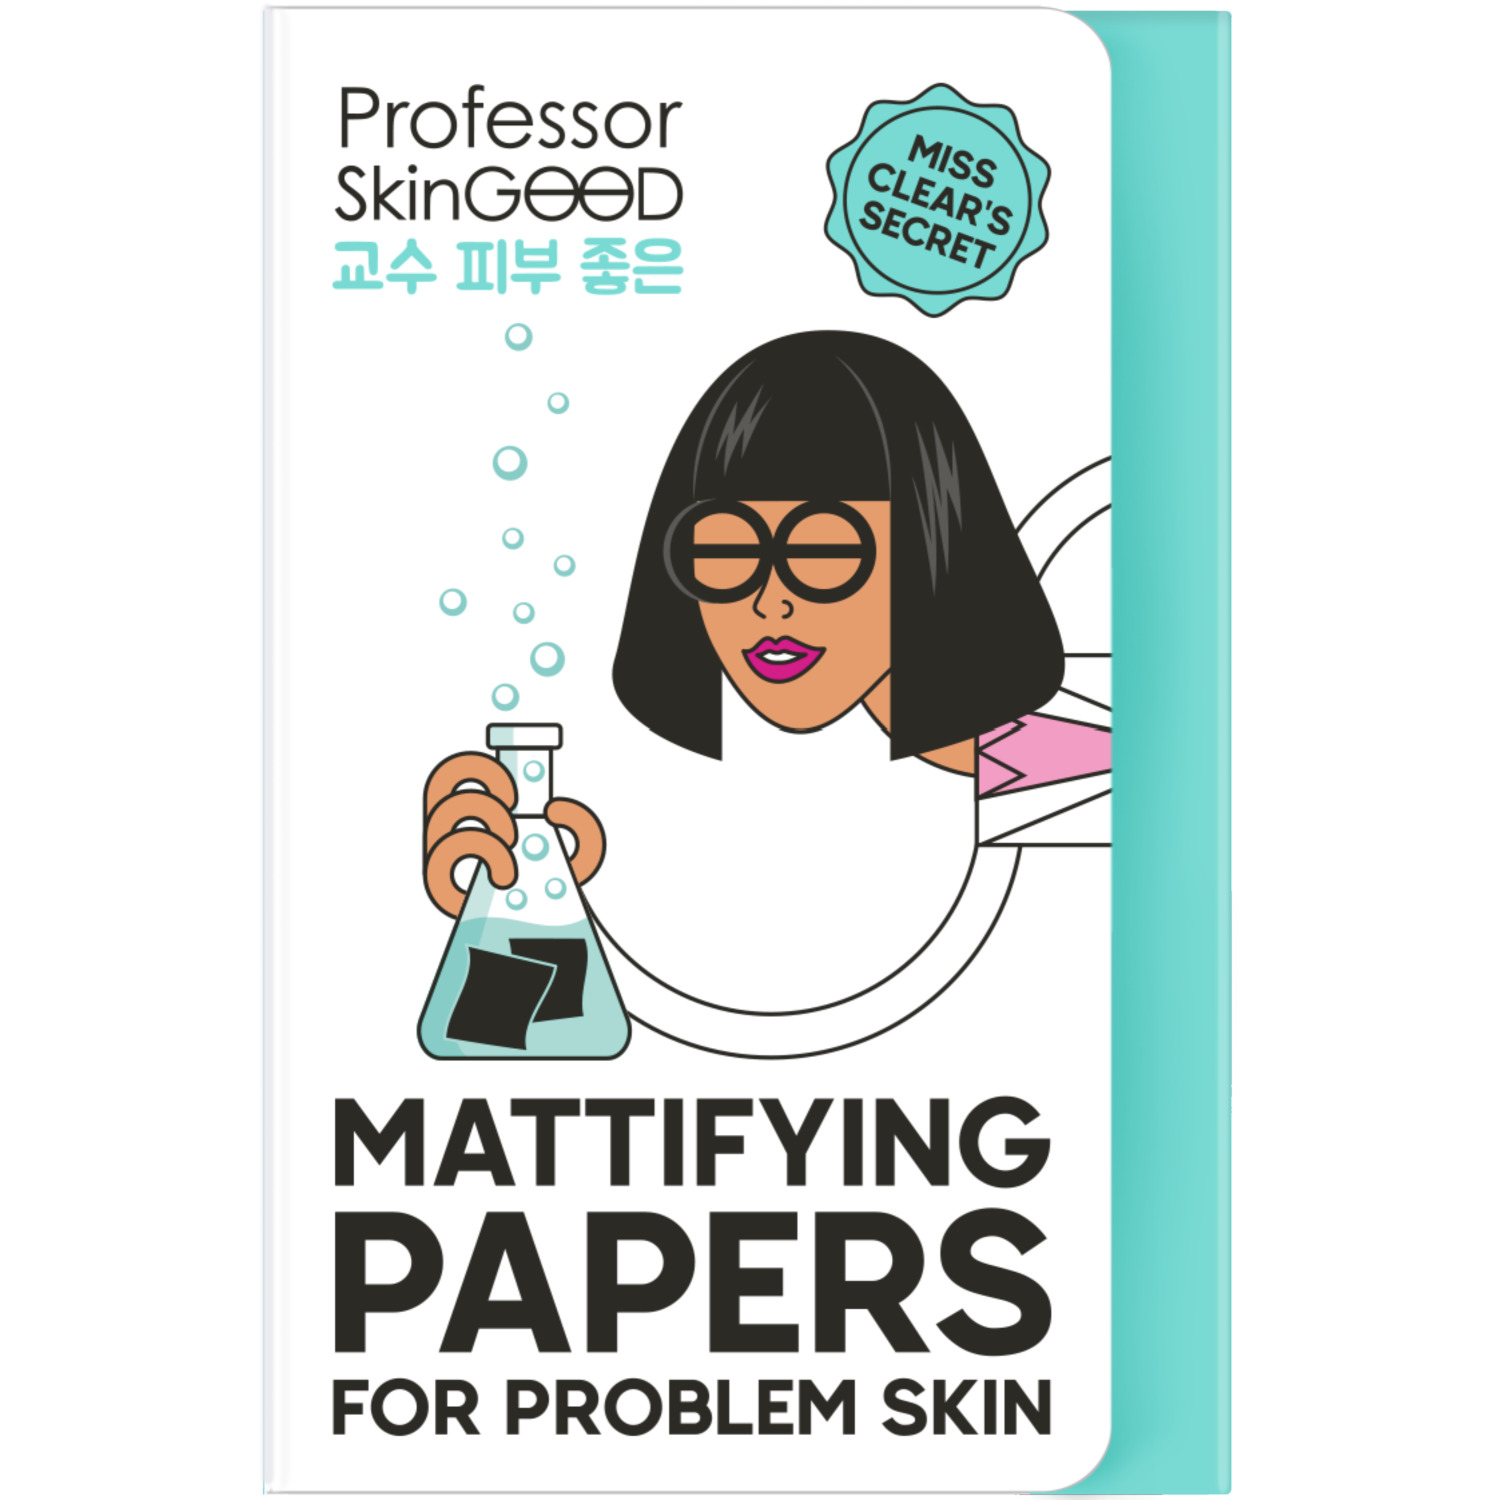 Салфетки Professor SkinGood Mattifying Papers матирующие для проблемной кожи 50 шт матирующие салфетки для лица grl pwr 50 шт